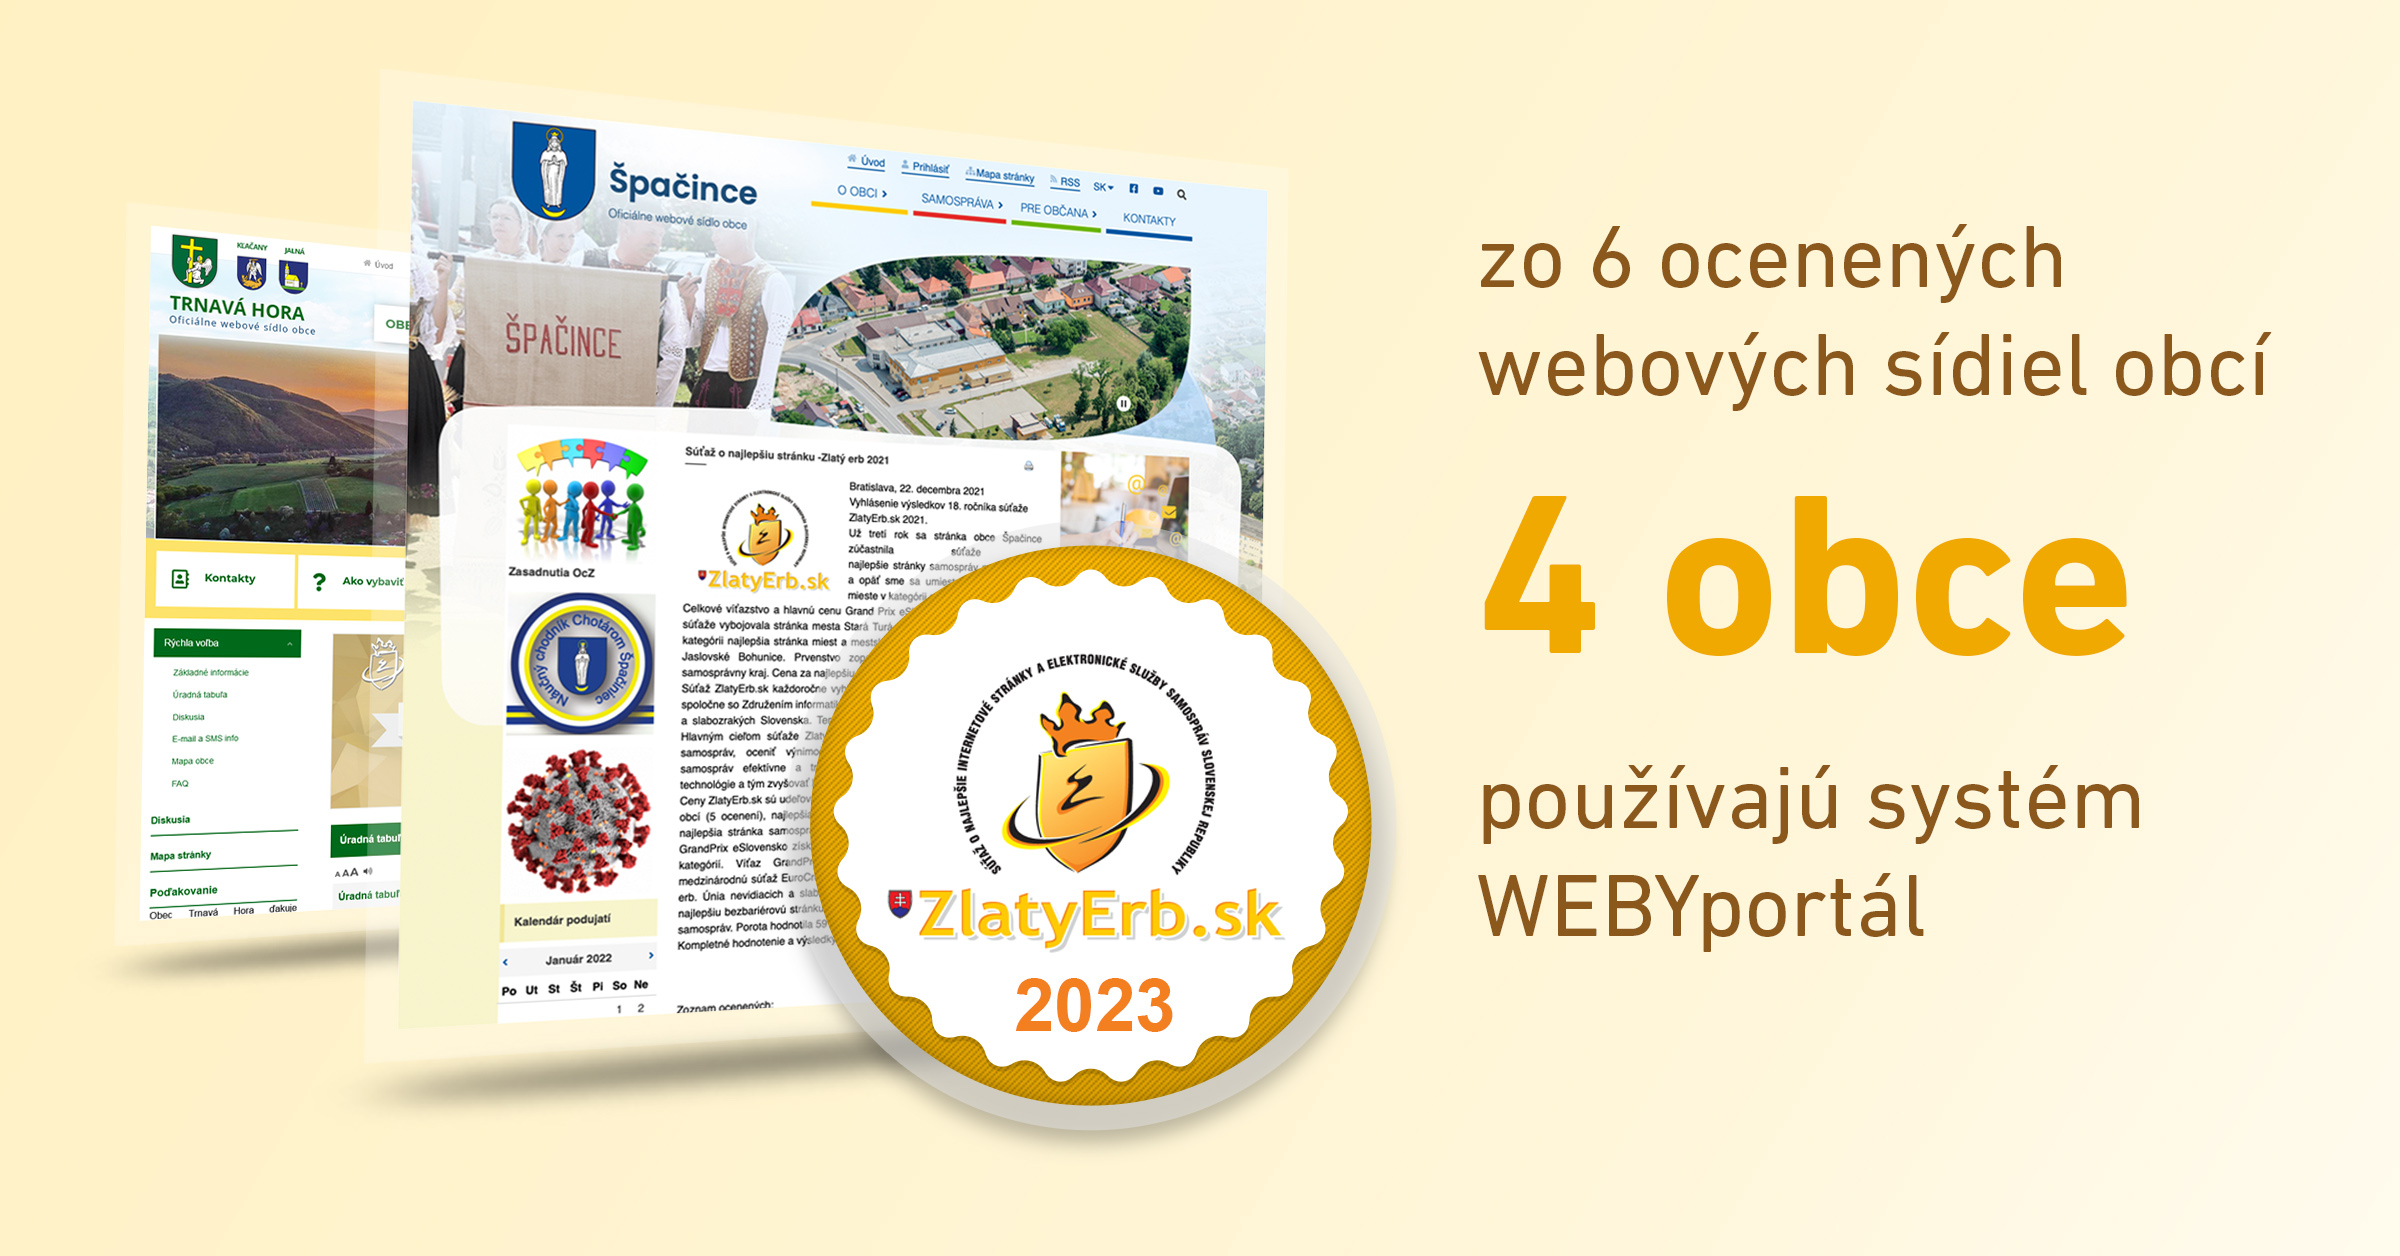 weby-group-zlaty-erb-2022